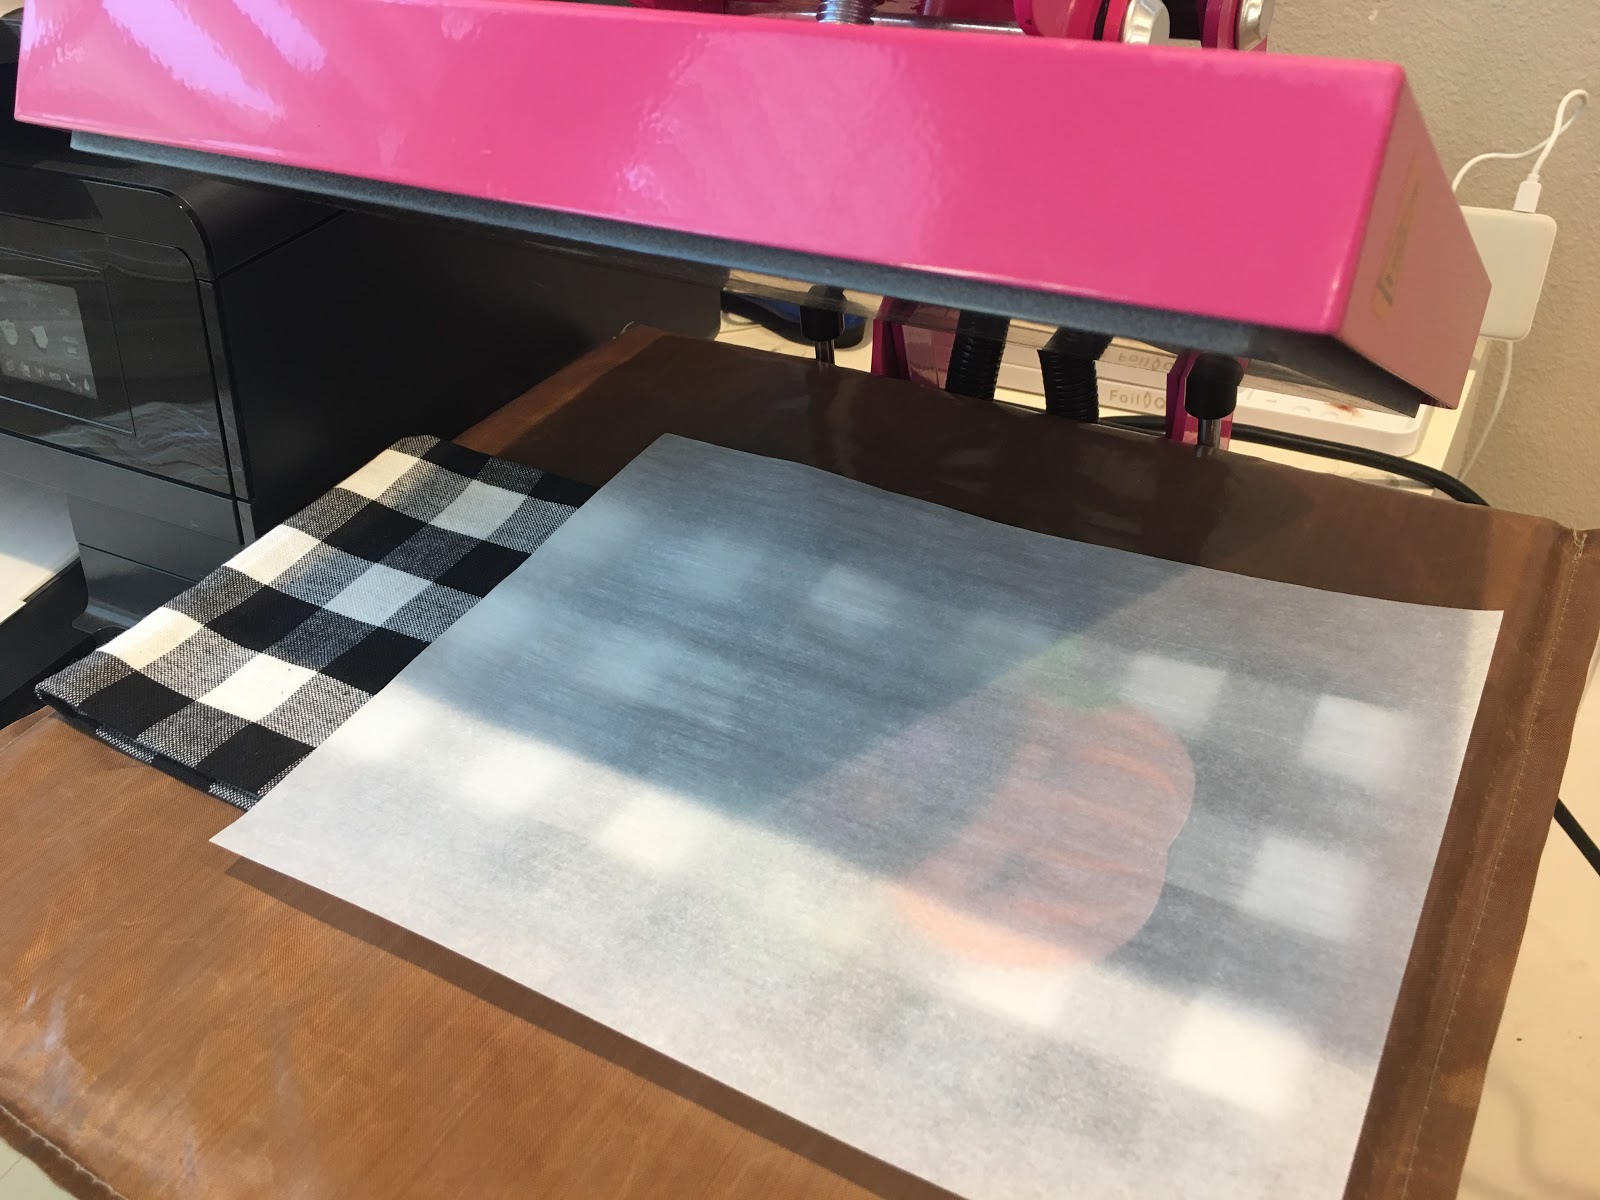 Finally!! Inkjet Printable Heat Transfer Material for Darks